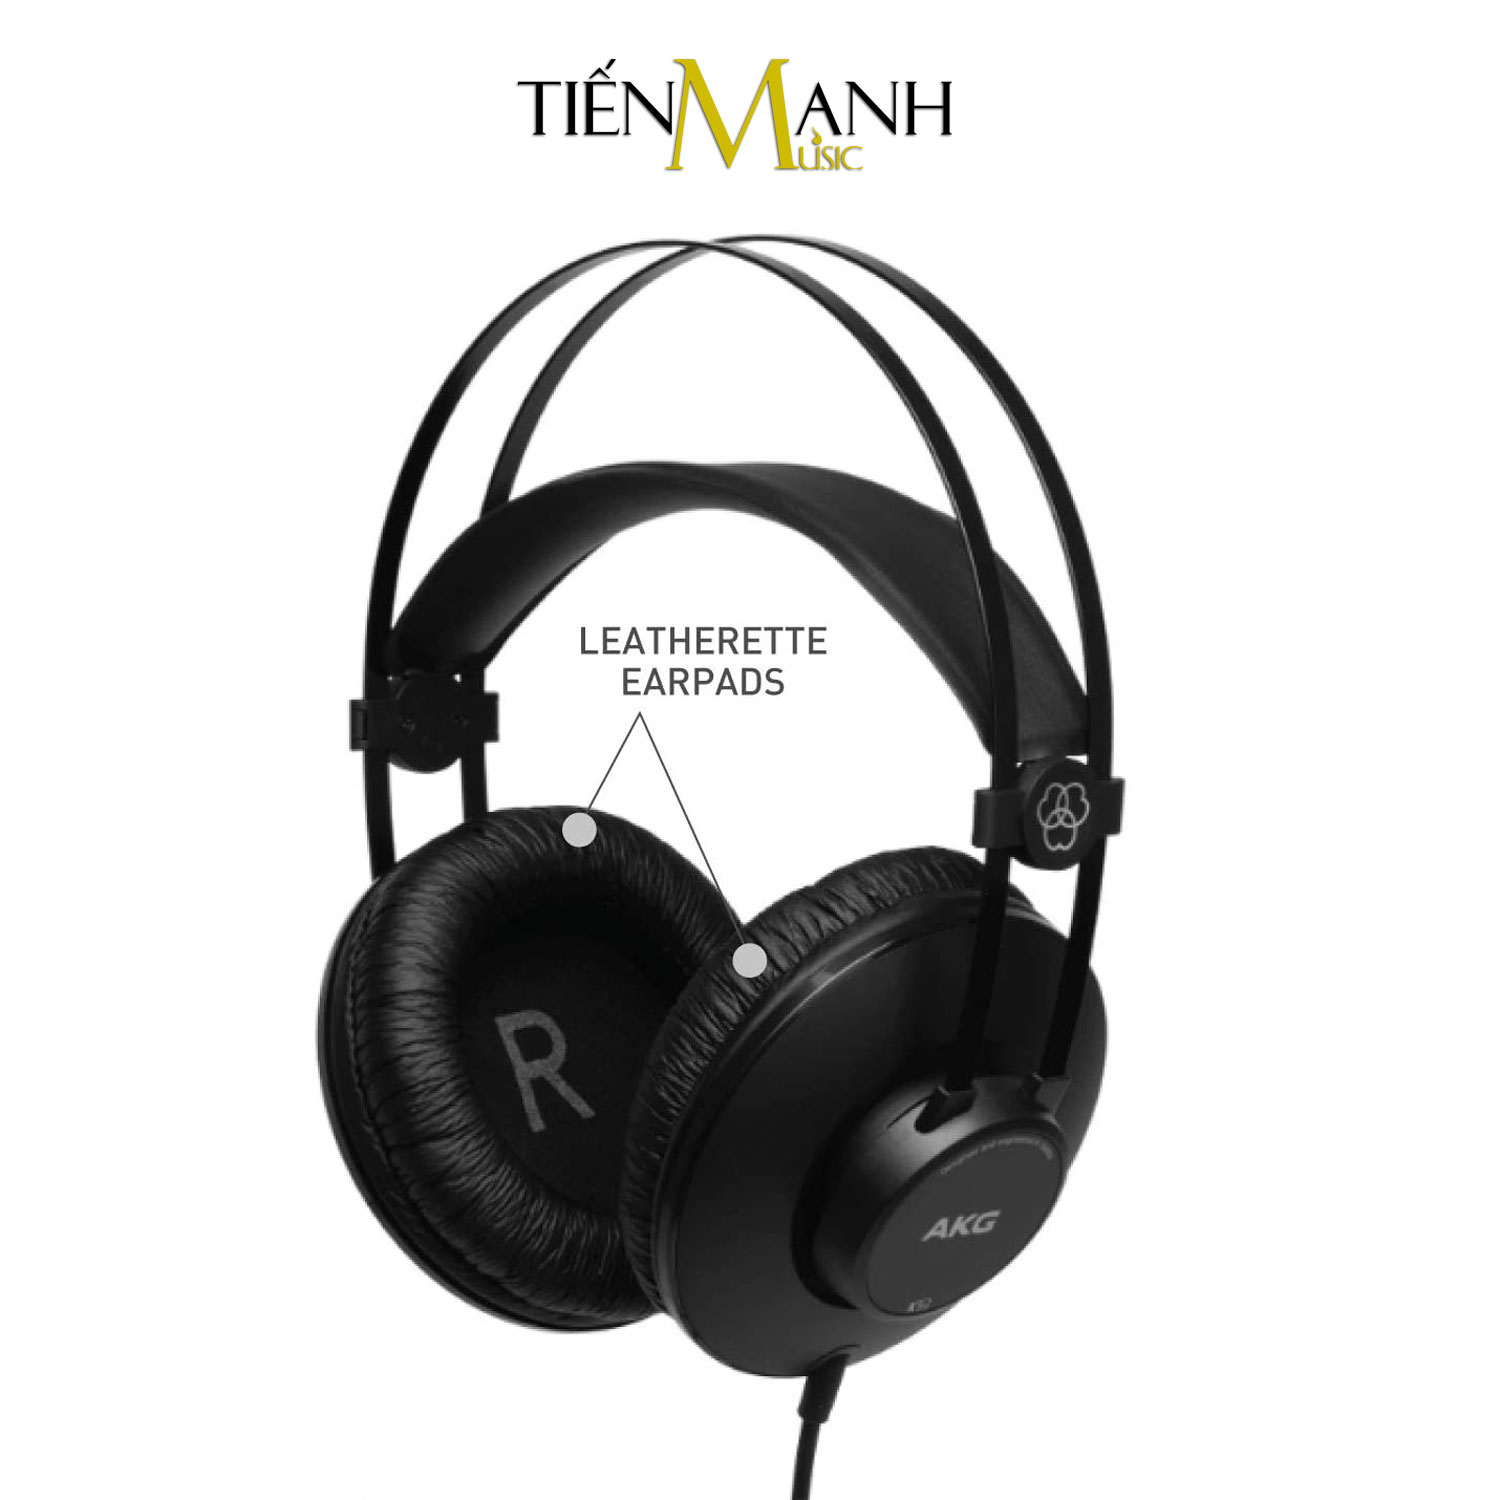 Tai Nghe Kiểm Âm AKG K52 Over-Ear Studio Monitor Headphones Professional - Kèm Móng Gẩy DreamMaker